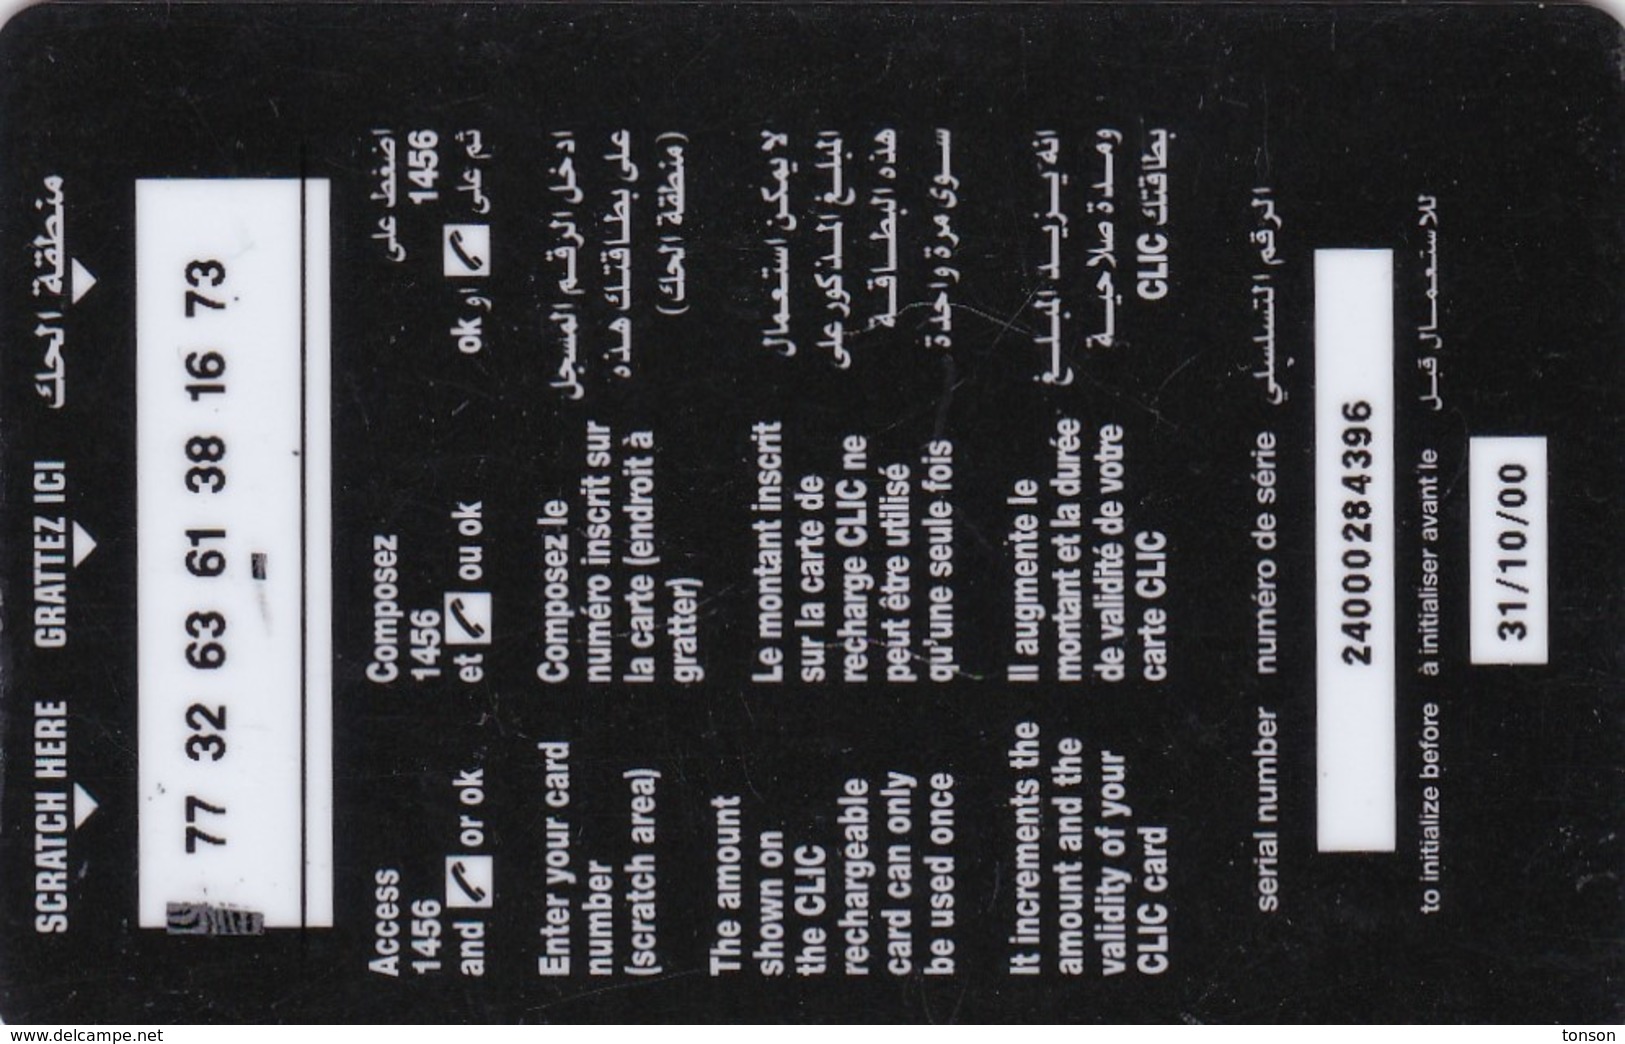 Lebanon, LB-CLC-REF-0014C, 44$, Clic Recharge Card, Family, 2 Scans.   Exp. : 31/10//00 - Líbano